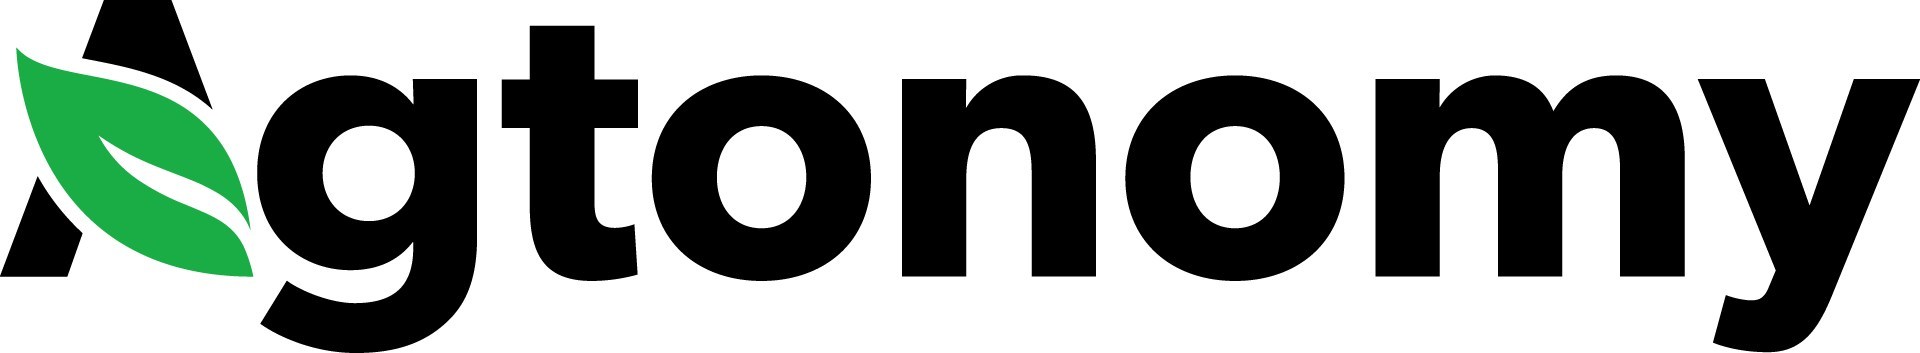 Agtonomy logo (PRNewsfoto/Agtonomy)